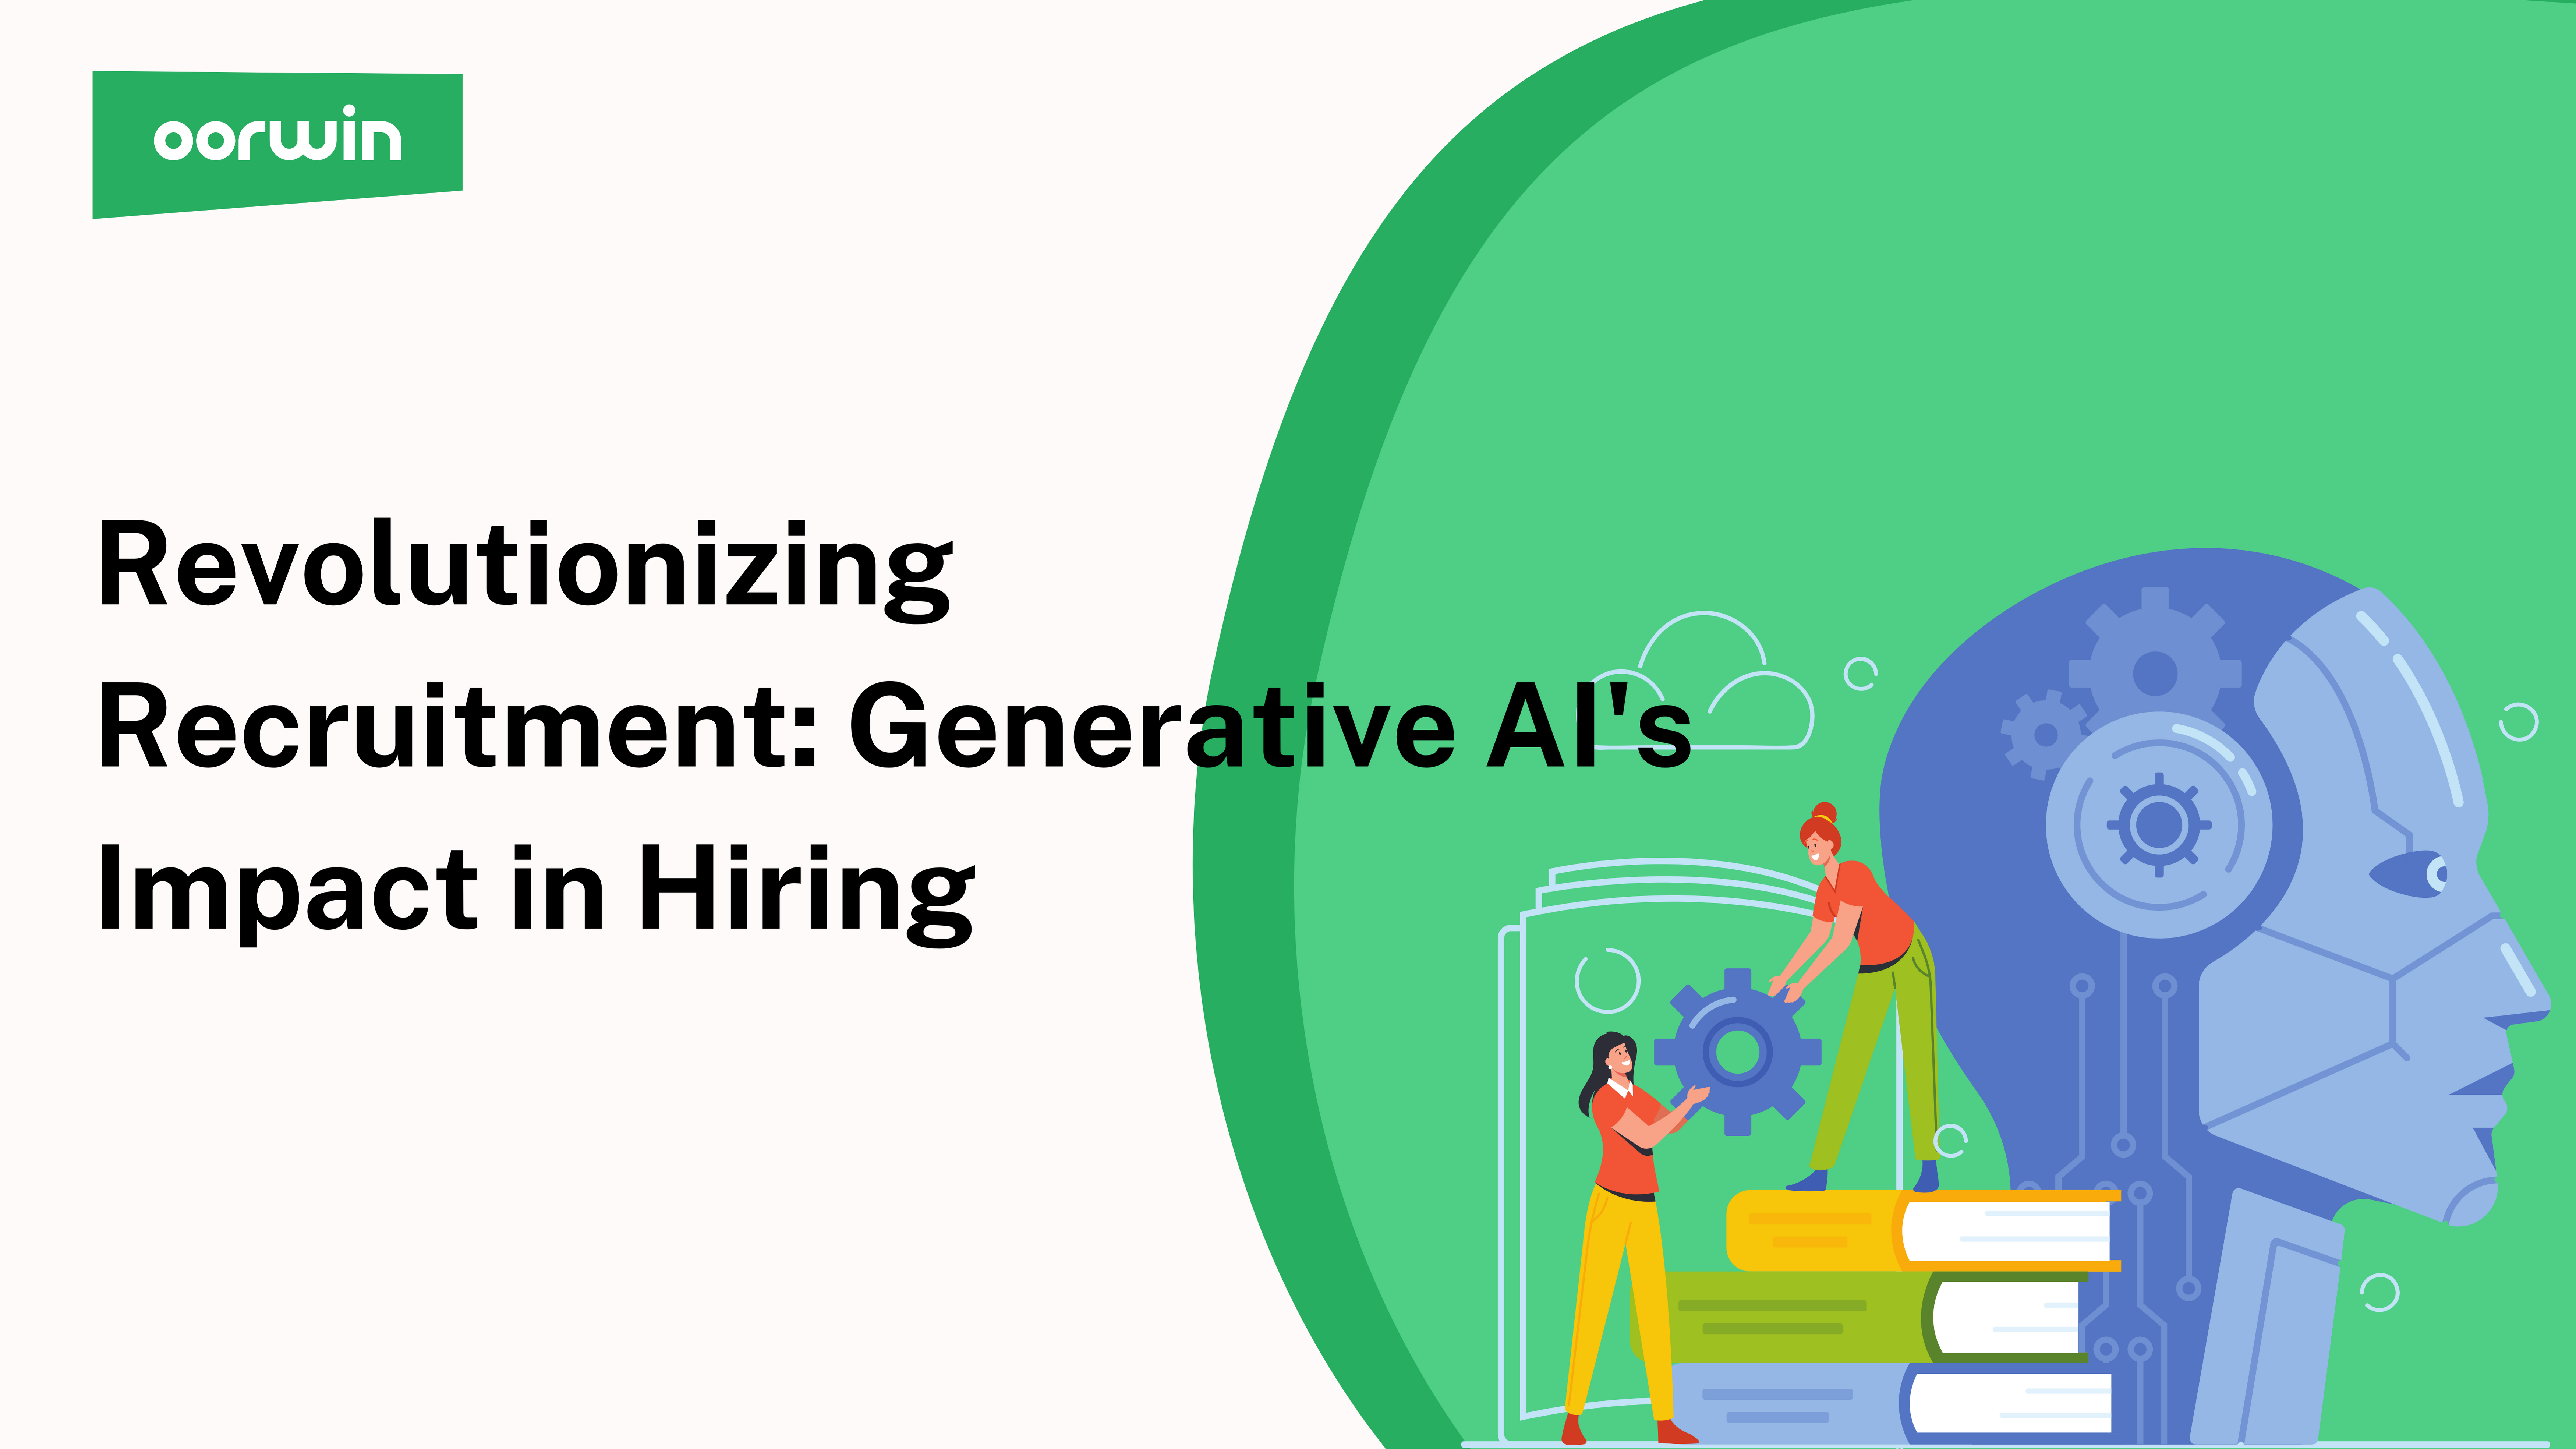 Revolutionizing Recruitment: Generative AI’s Impact on Hiring